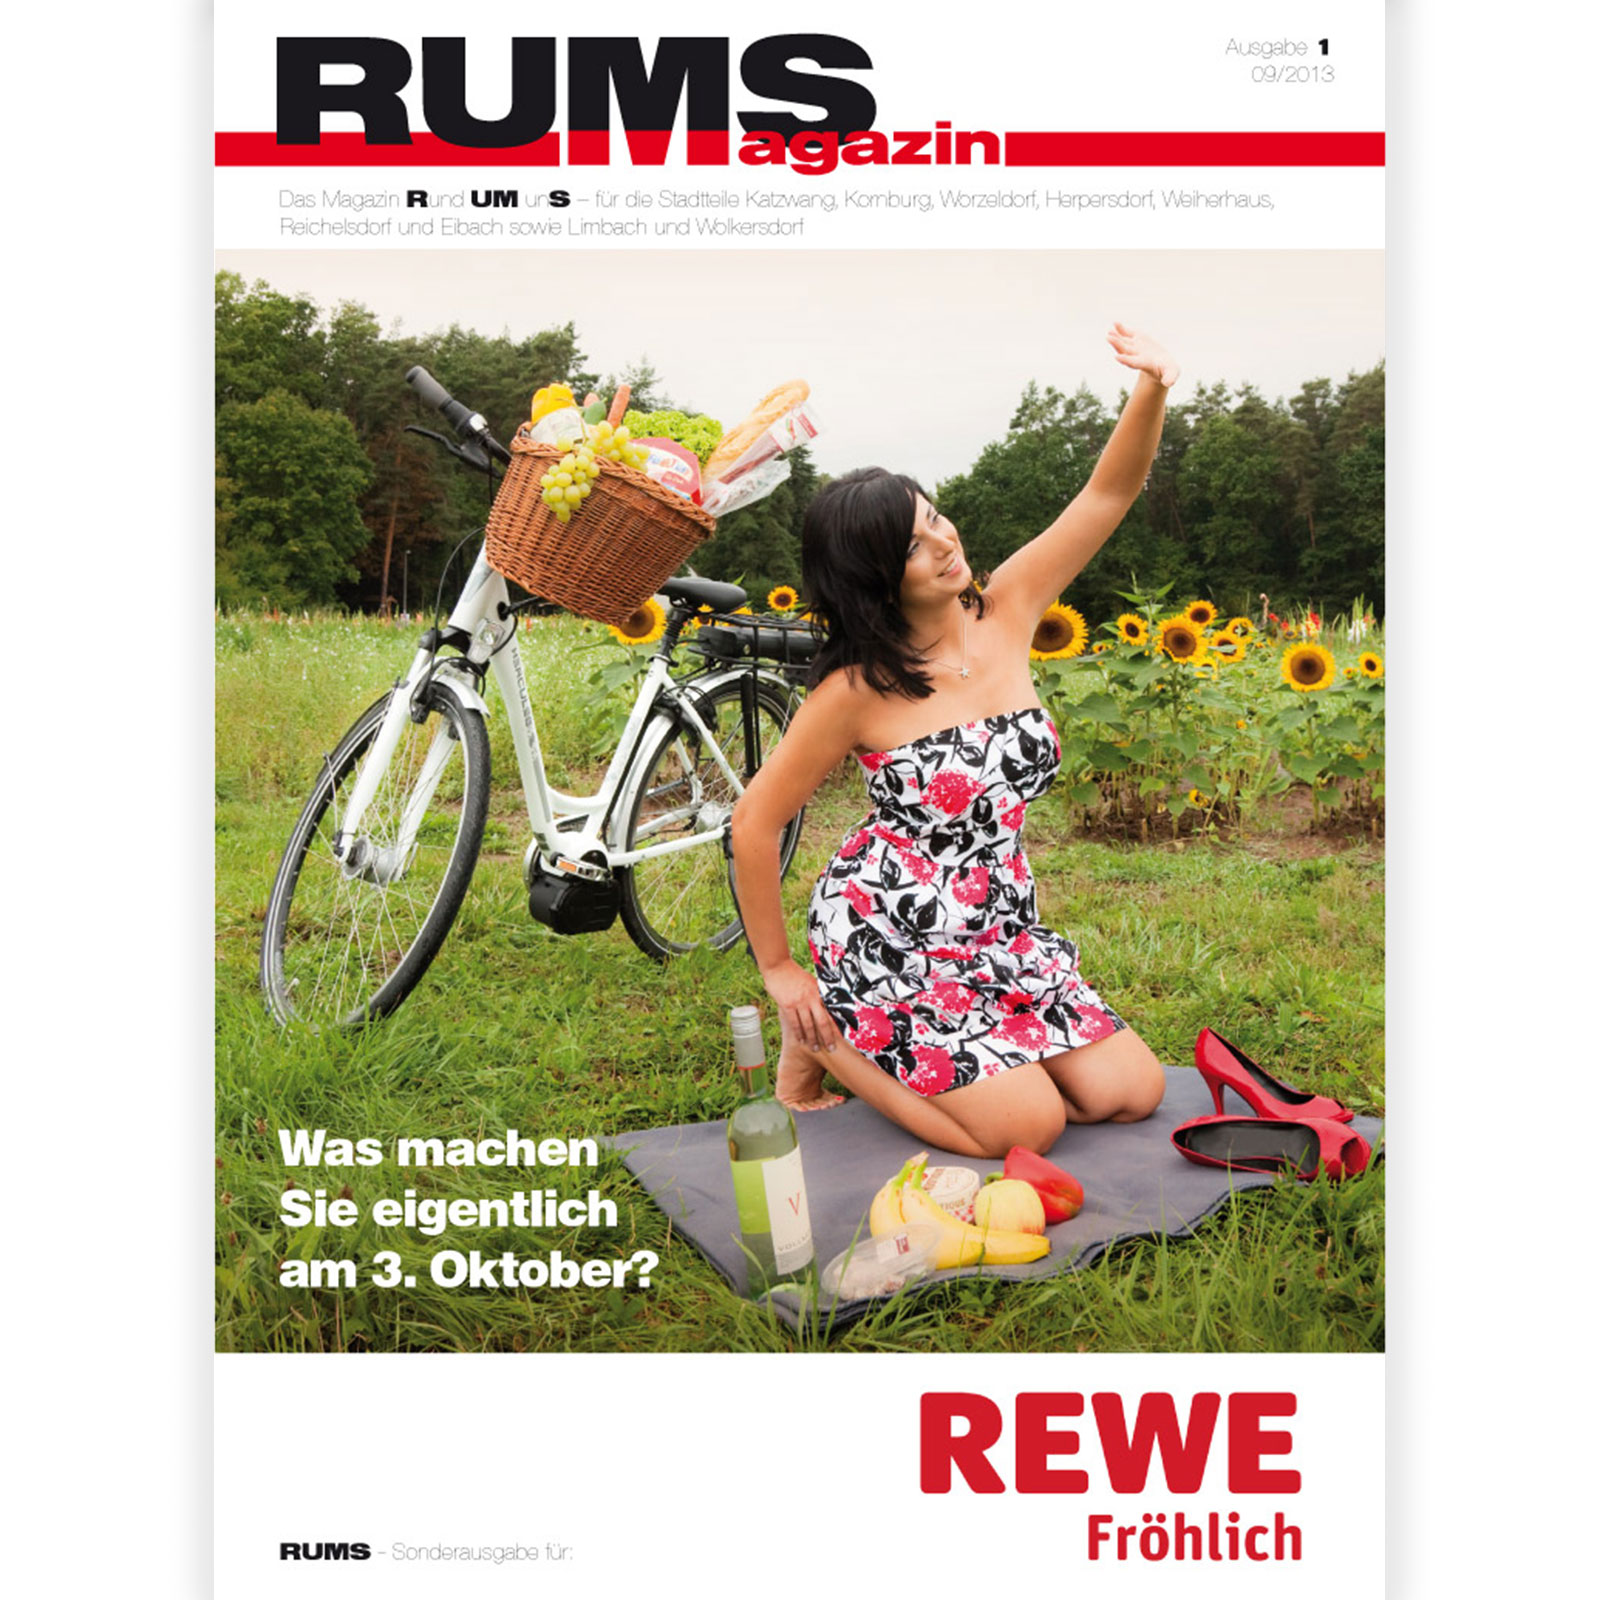 RUMs Magazin Stefan Wiest Glashaus Nürnberg Fotografie Fotostudio Werbeagentur